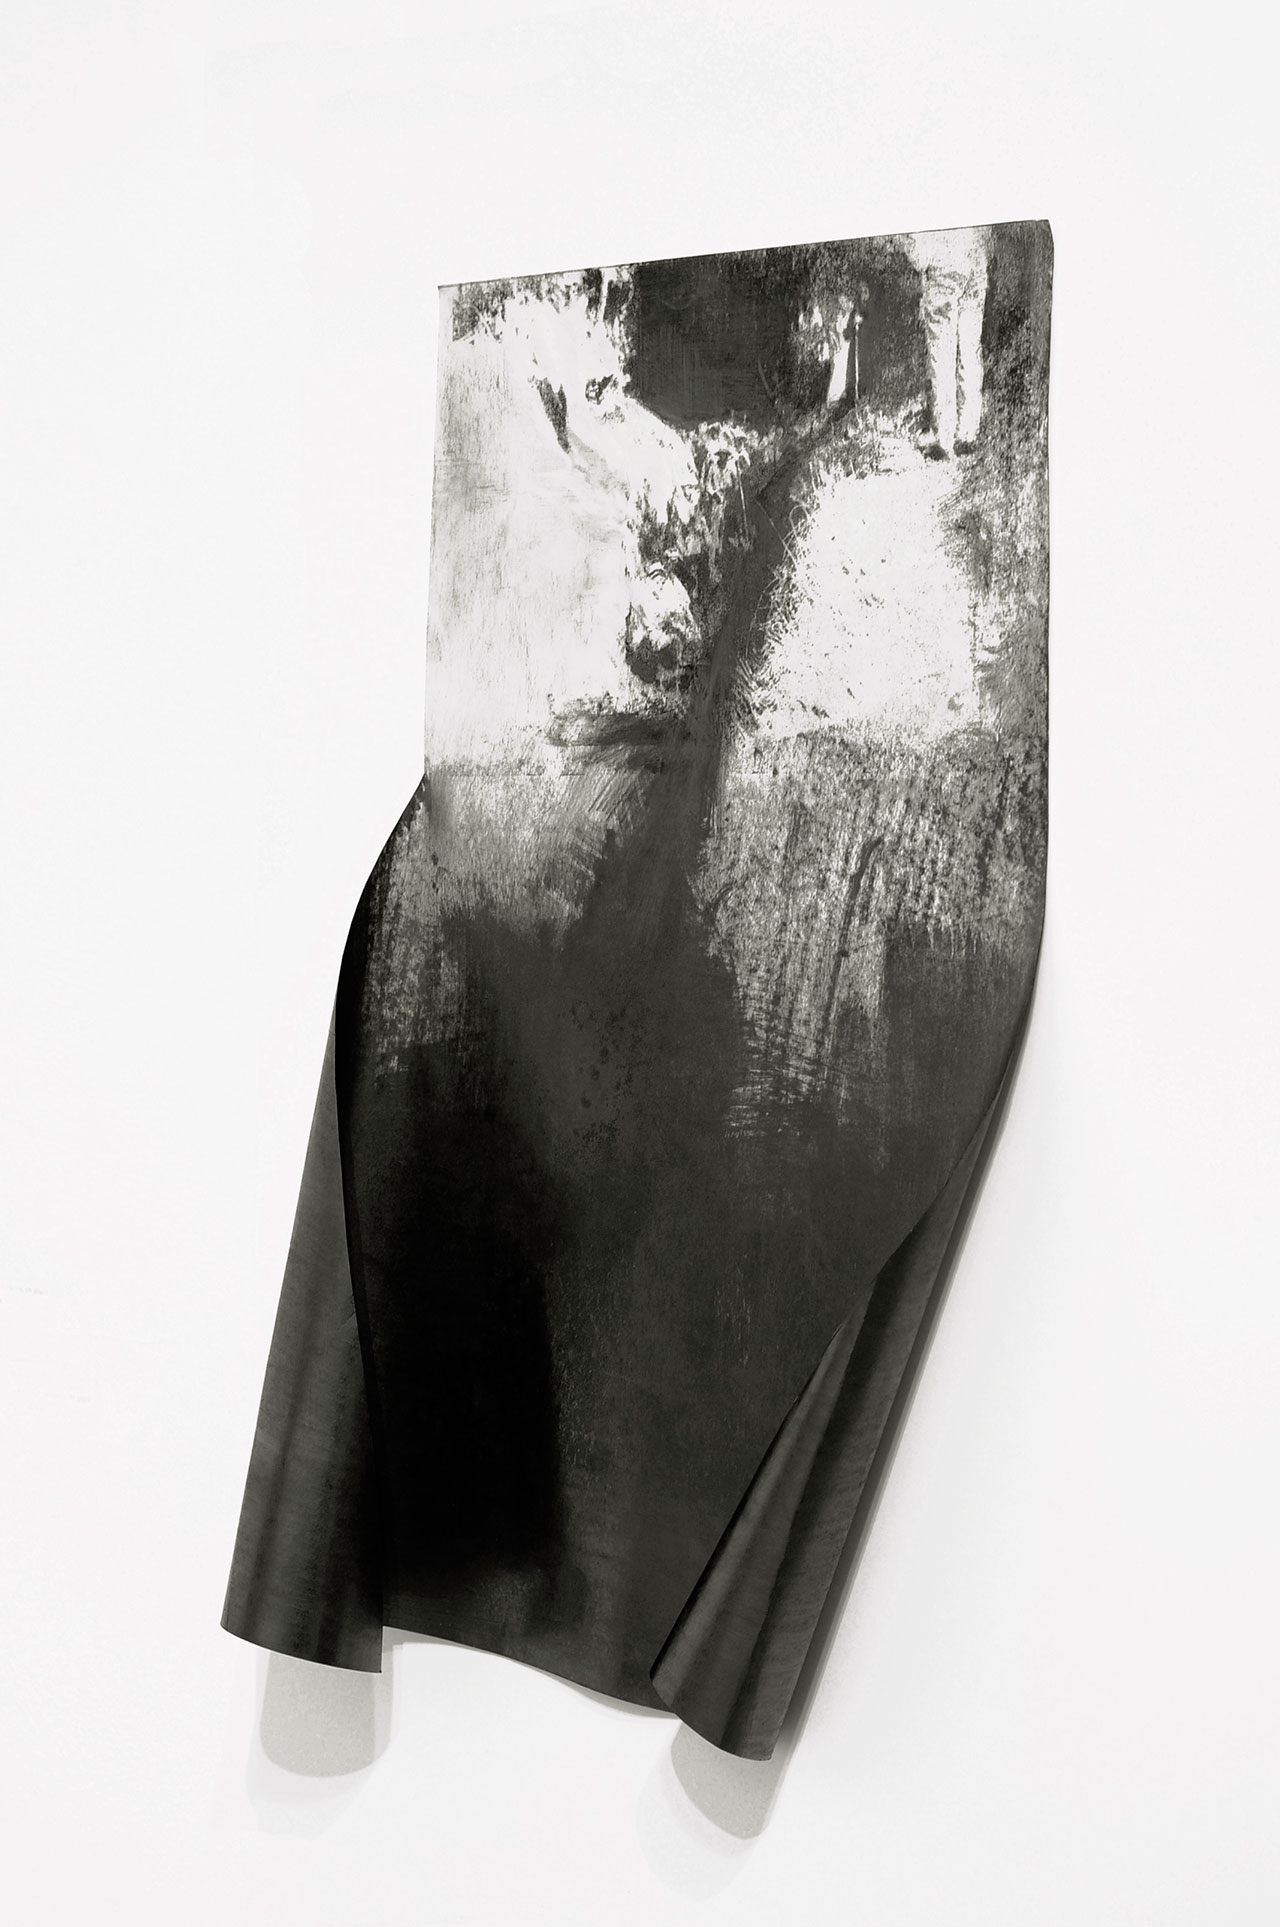 Despina Flessa, Mining, graphite print and graphite on paper, 54,5 x 35,5 cm, 2015. Photo by Costas Christou. 